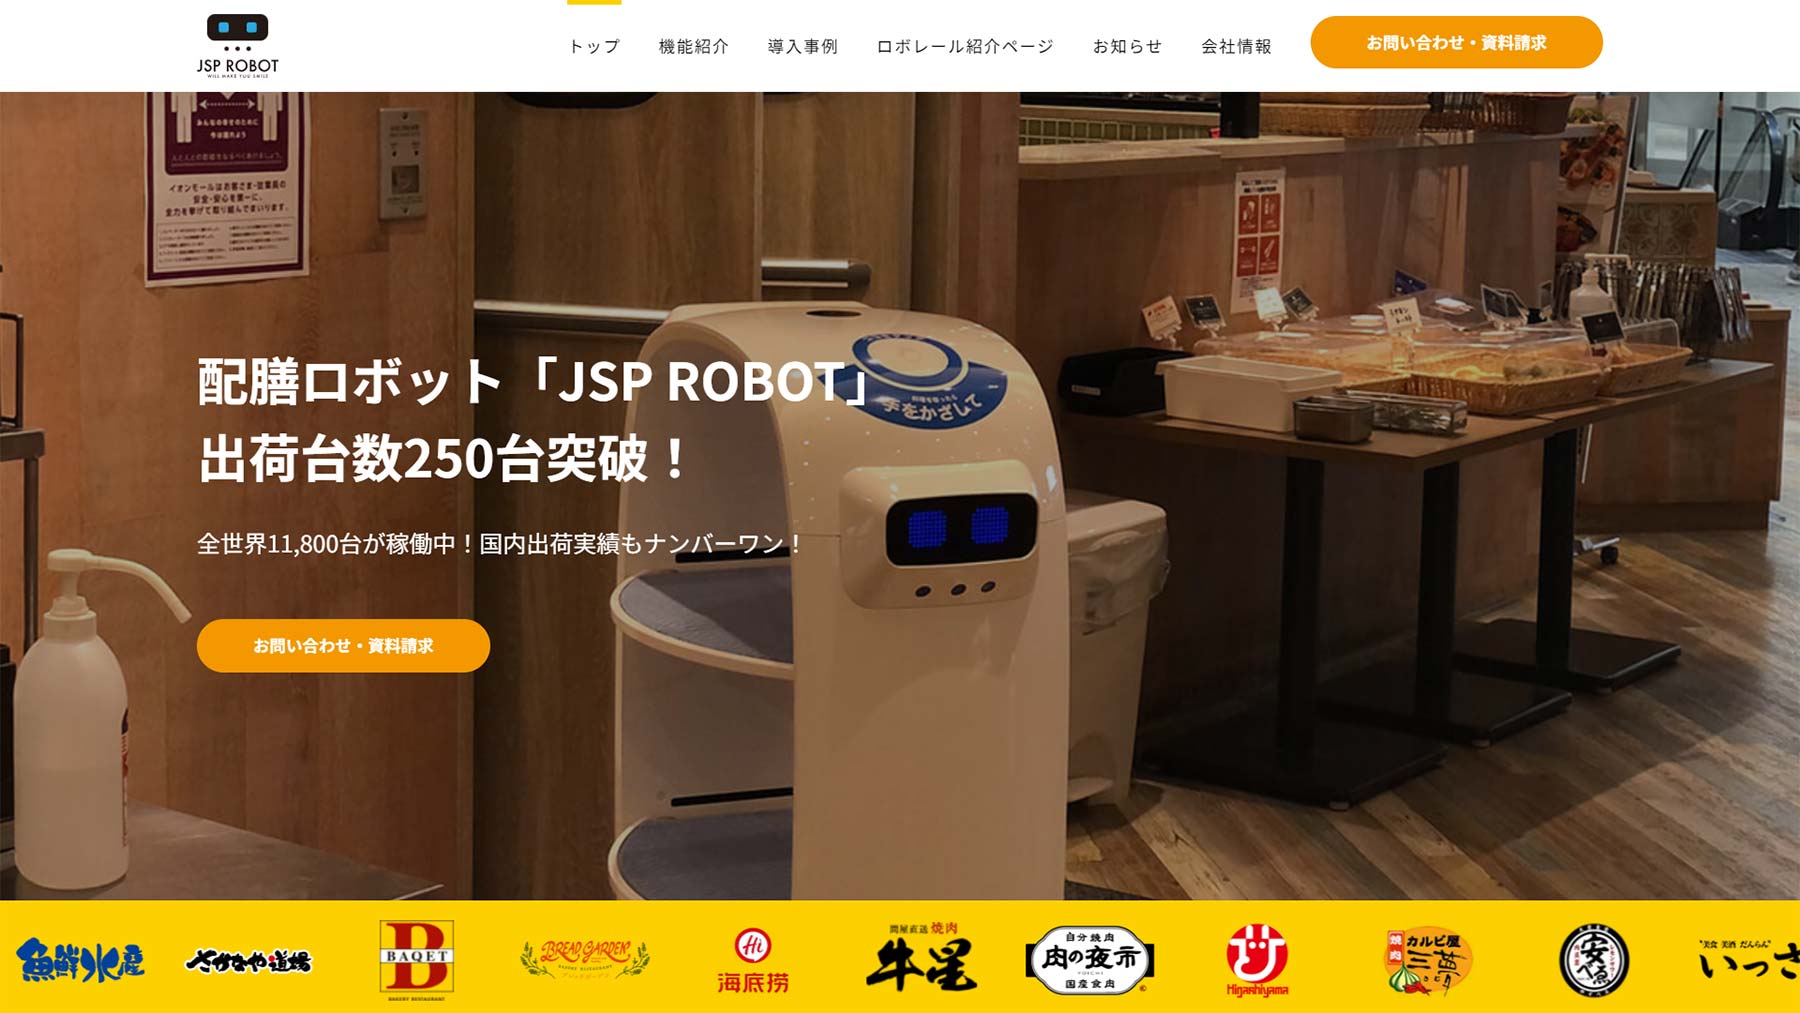 JSP ROBOT公式Webサイト